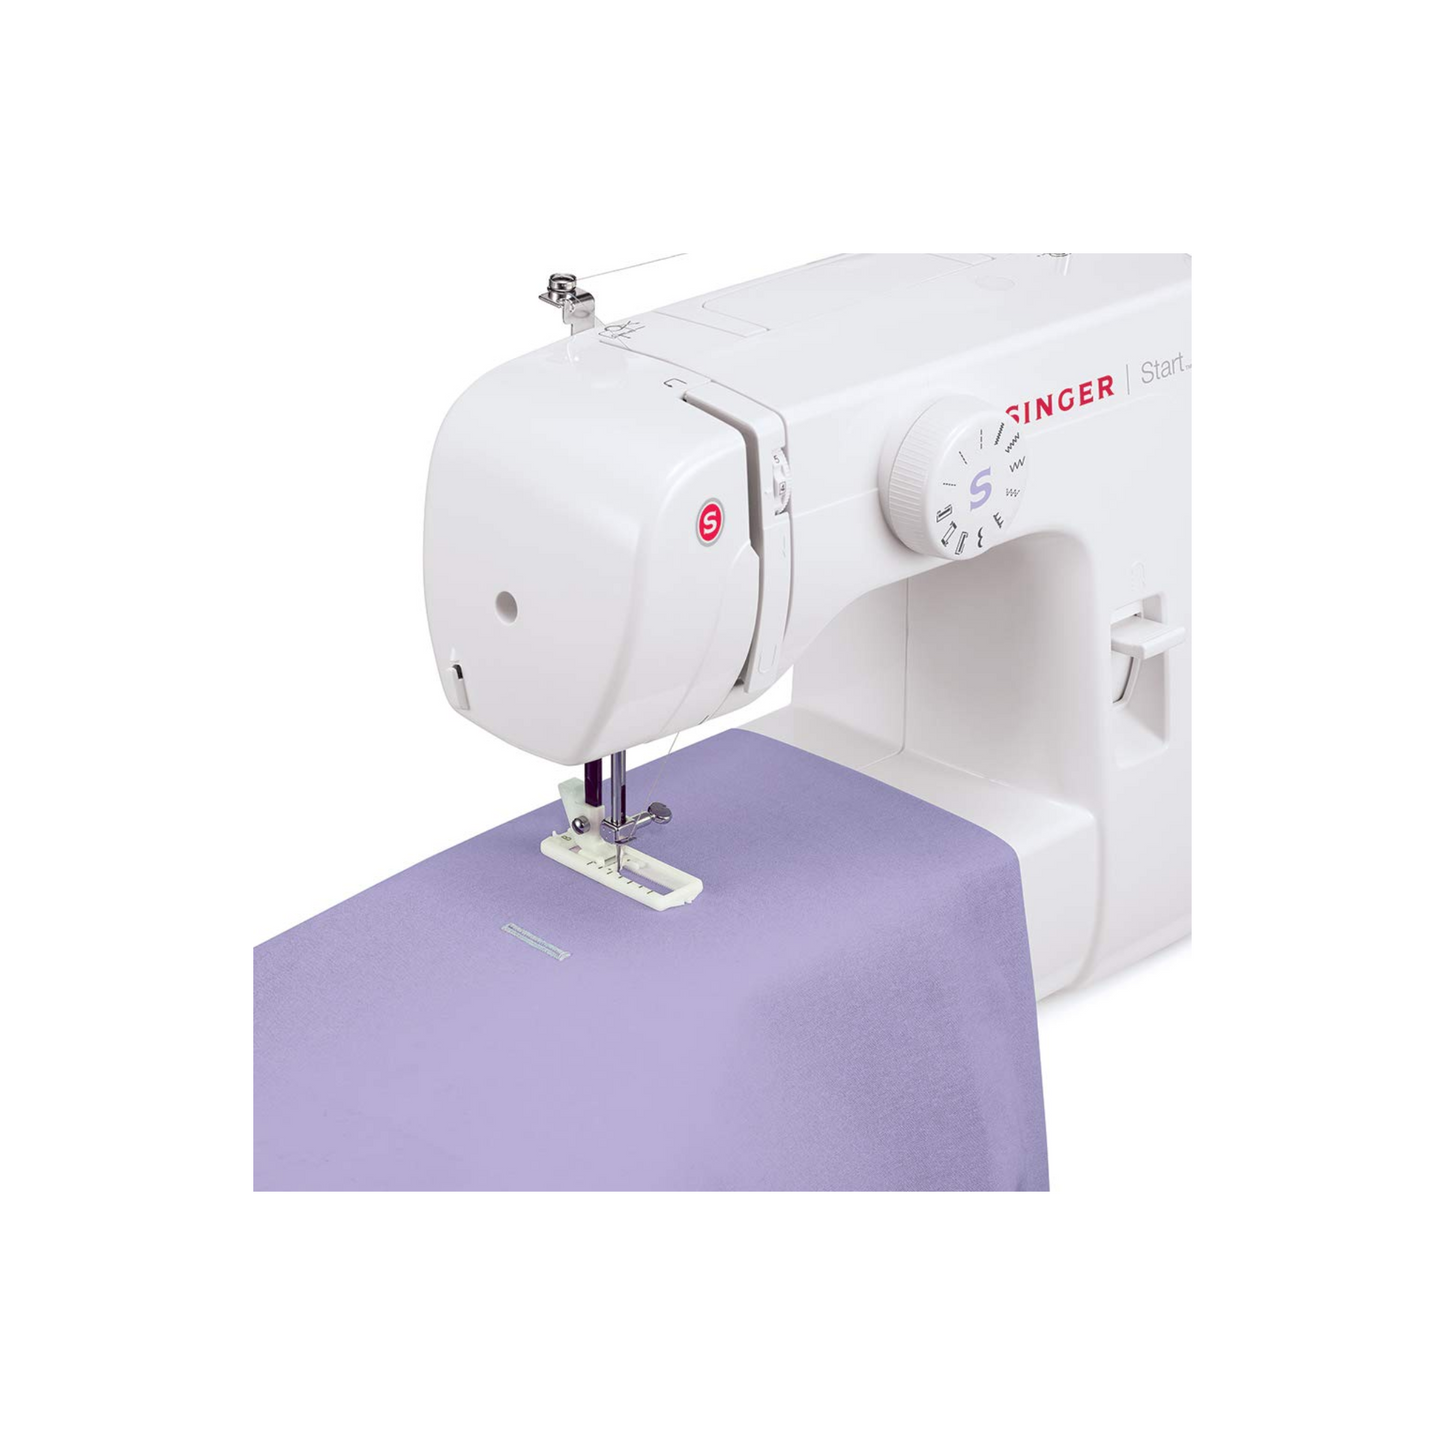 Singer start 1306 - Sewing machine - White - Side view